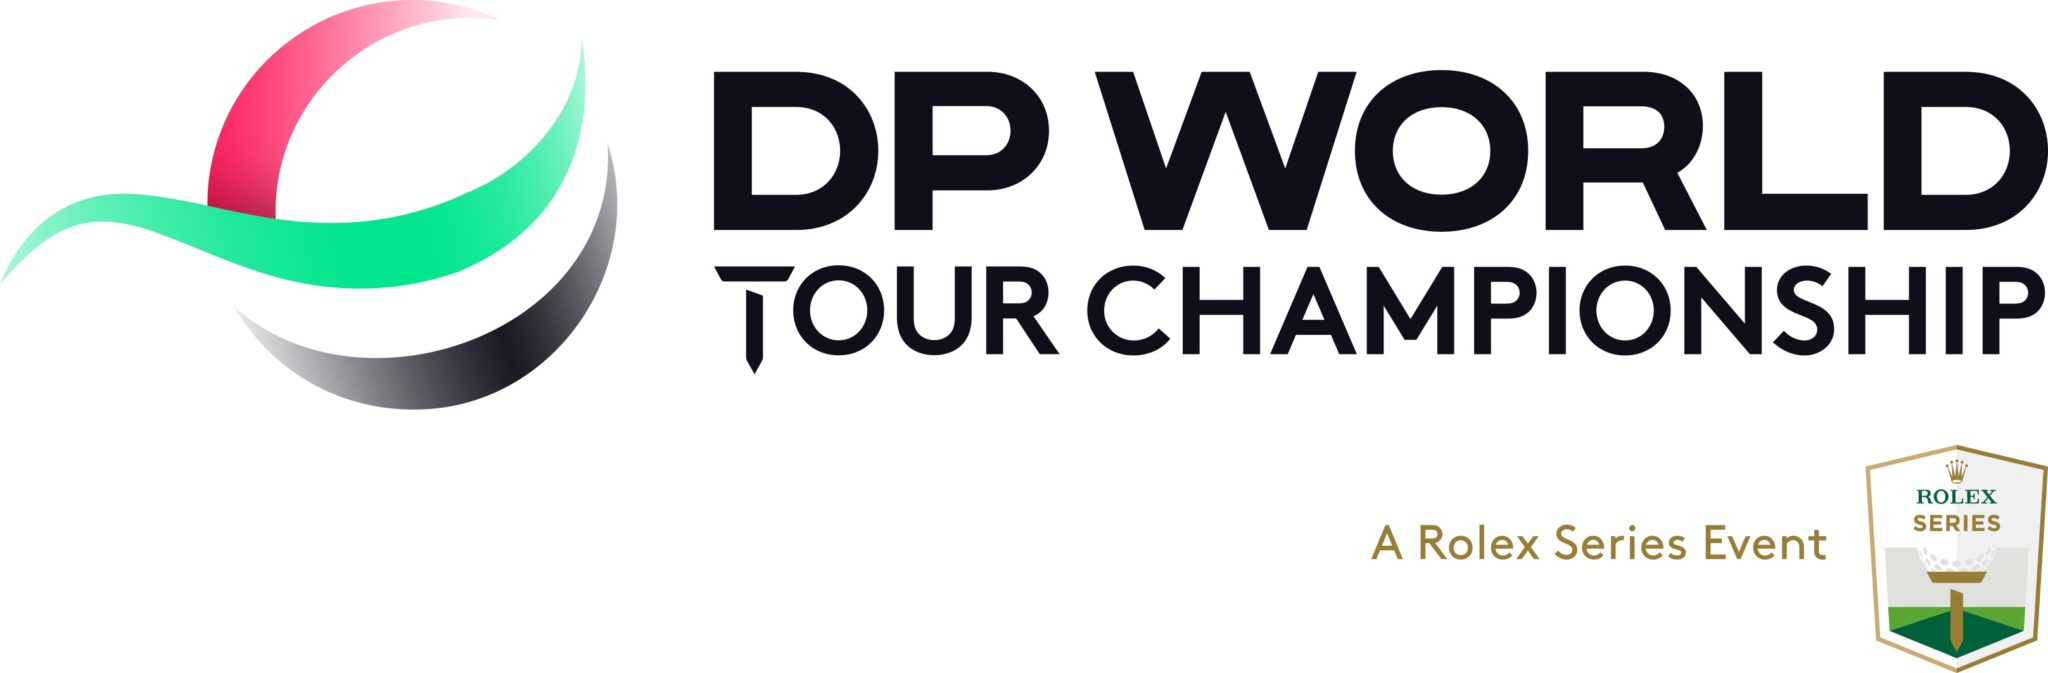 BDSwiss Official Sponsor of Golf’s DP World Tour Championship